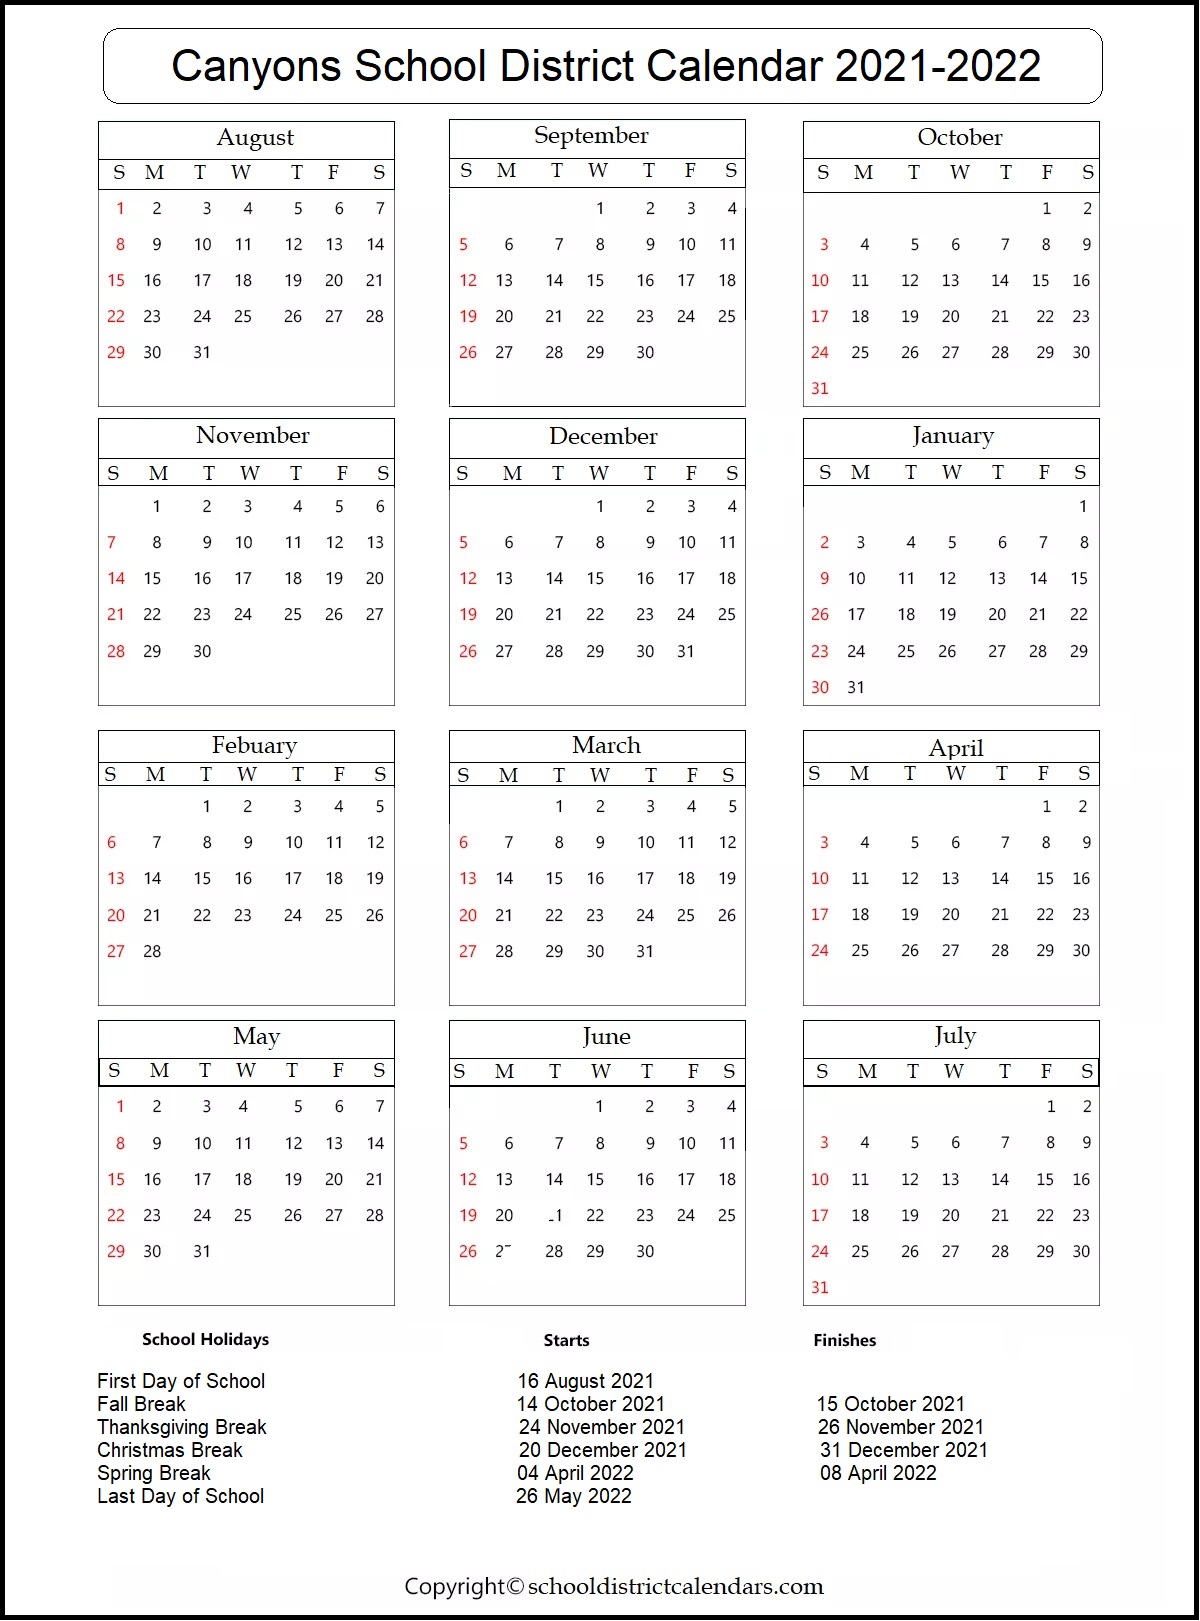 Canyons School District Calendar 2021-2022